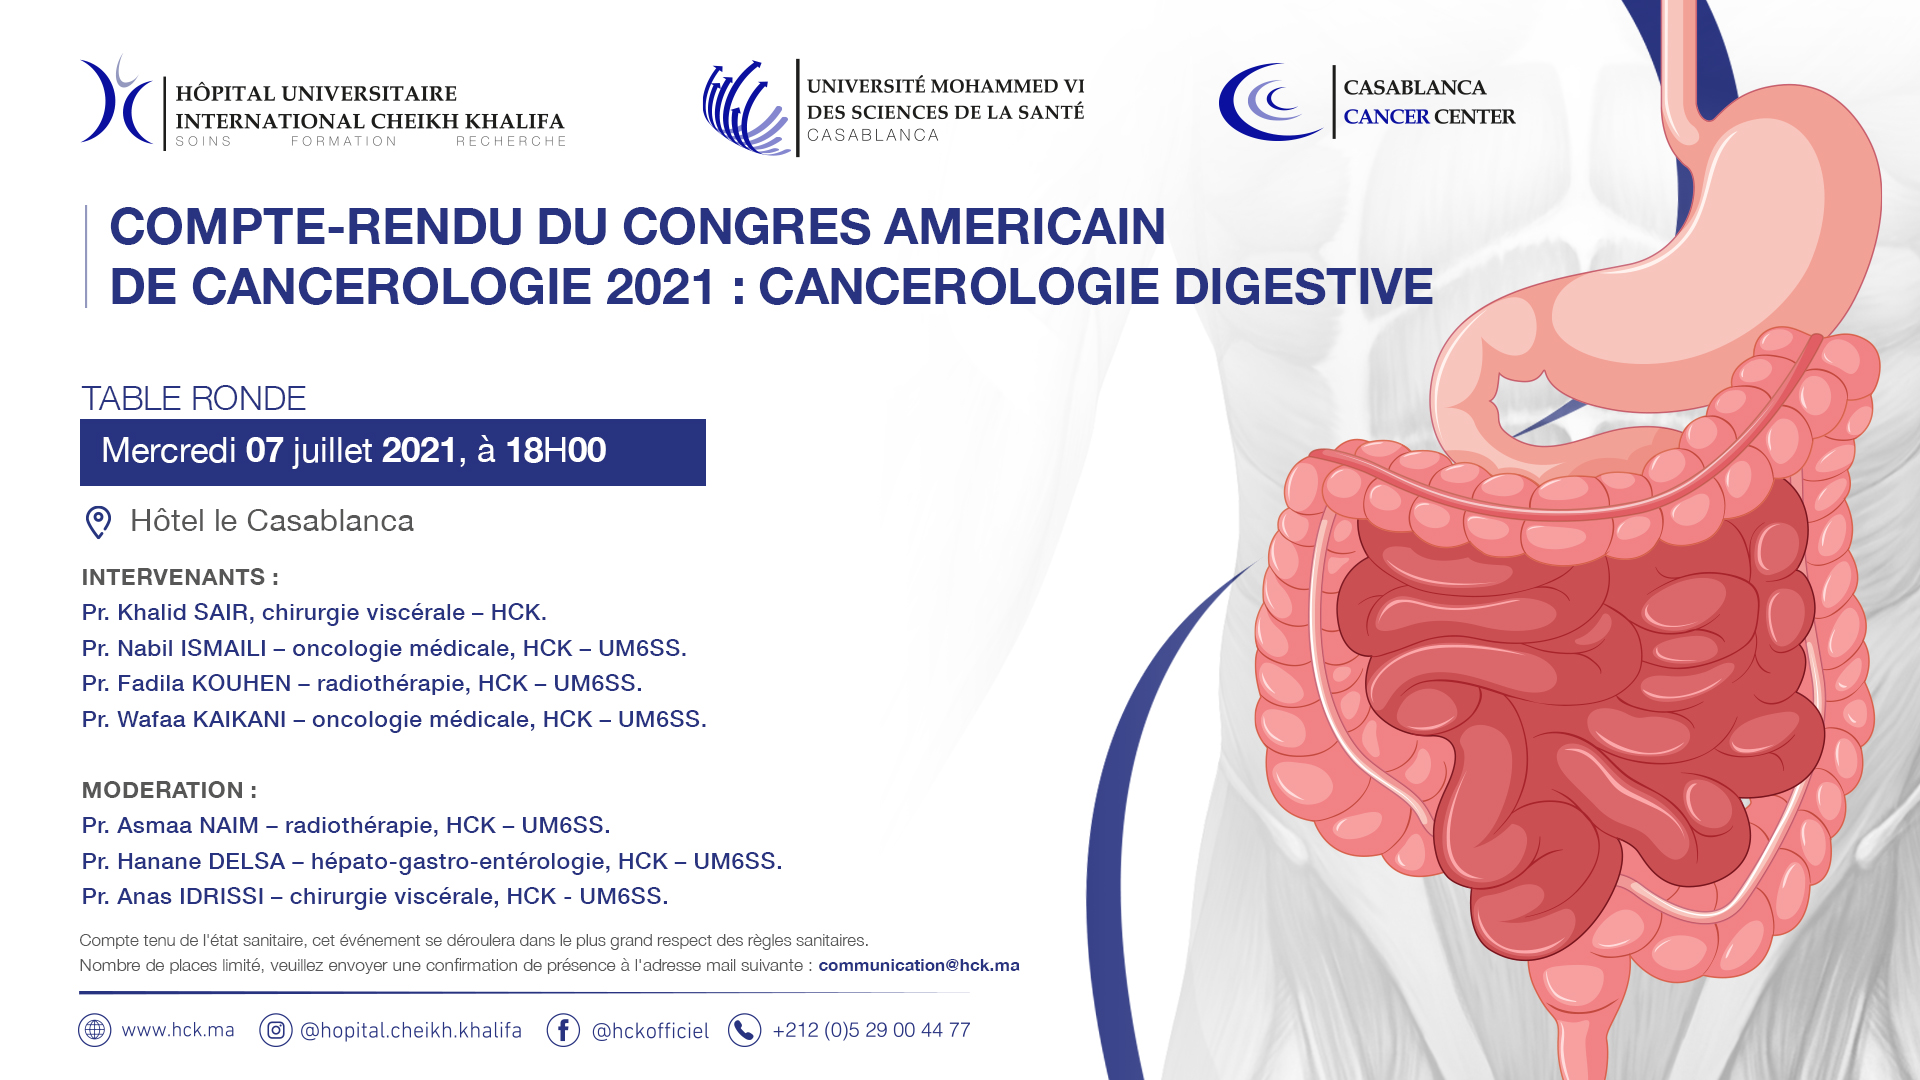 TABLE RONDE - COMPTE-RENDU DU CONGRES AMERICAIN DE CANCEROLOGIE 2021 : CANCEROLOGIE DIGESTIVE